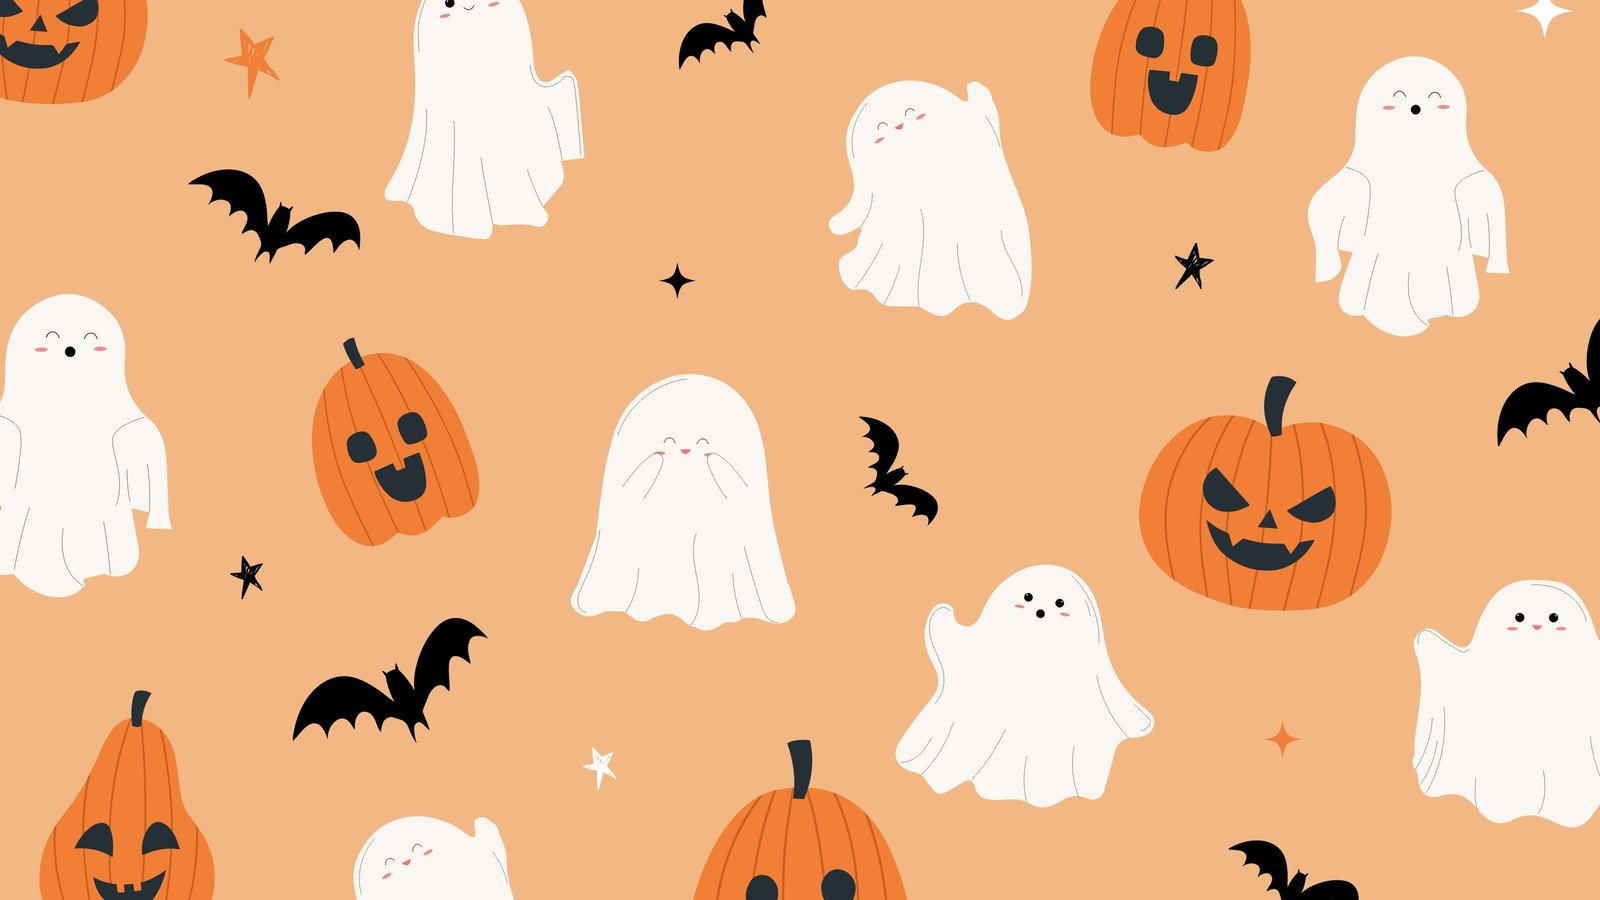 Cute Halloween Wallpaper Images  Free Download on Freepik